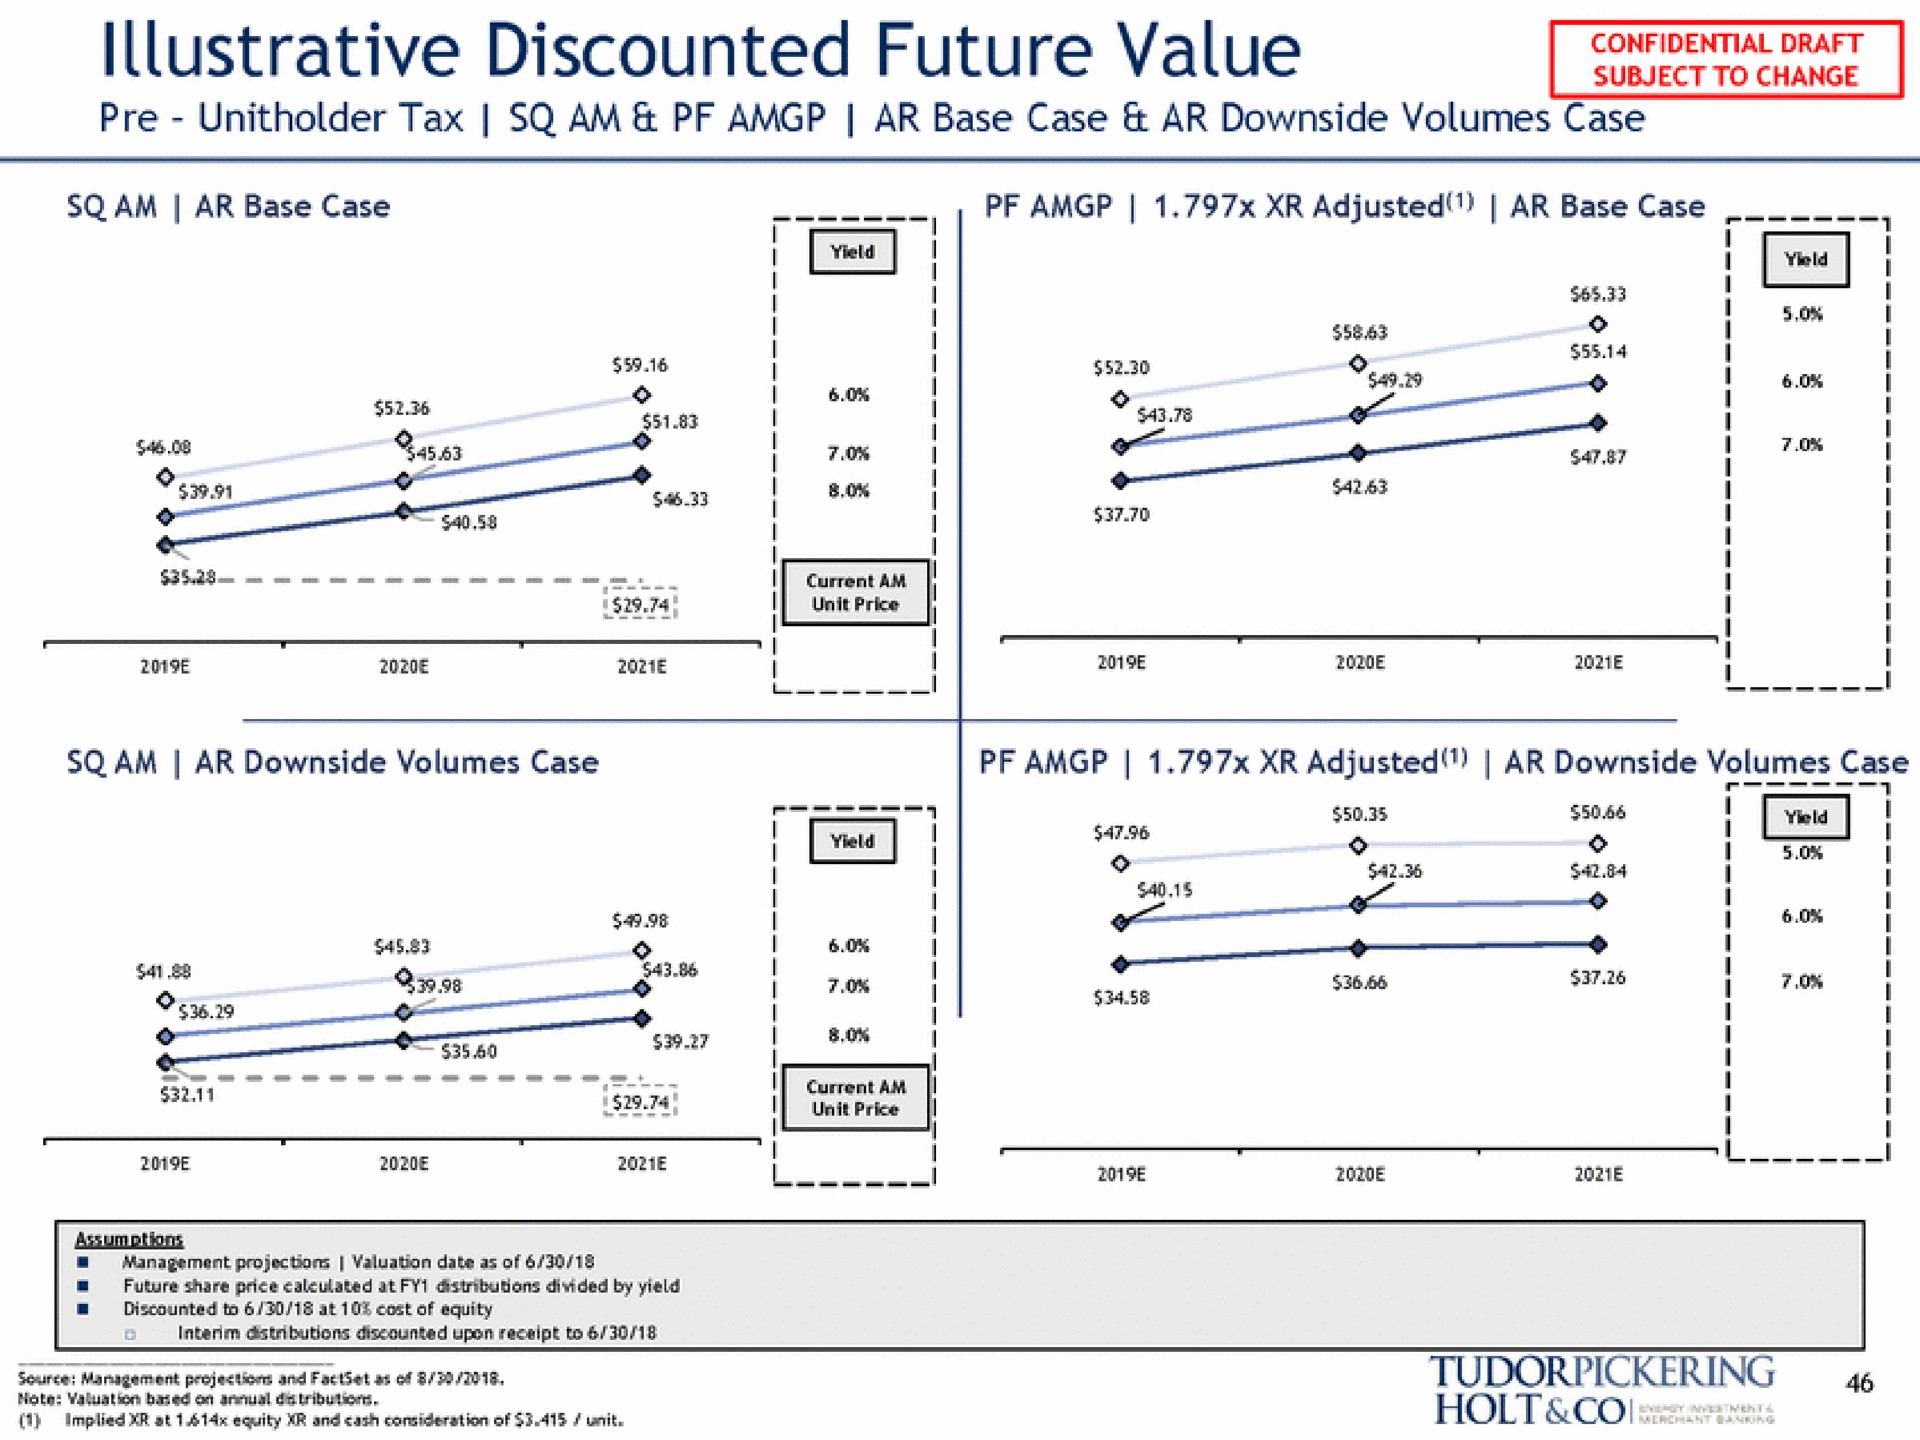 illustrative discounted future value as lee a | Tudor, Pickering, Holt & Co